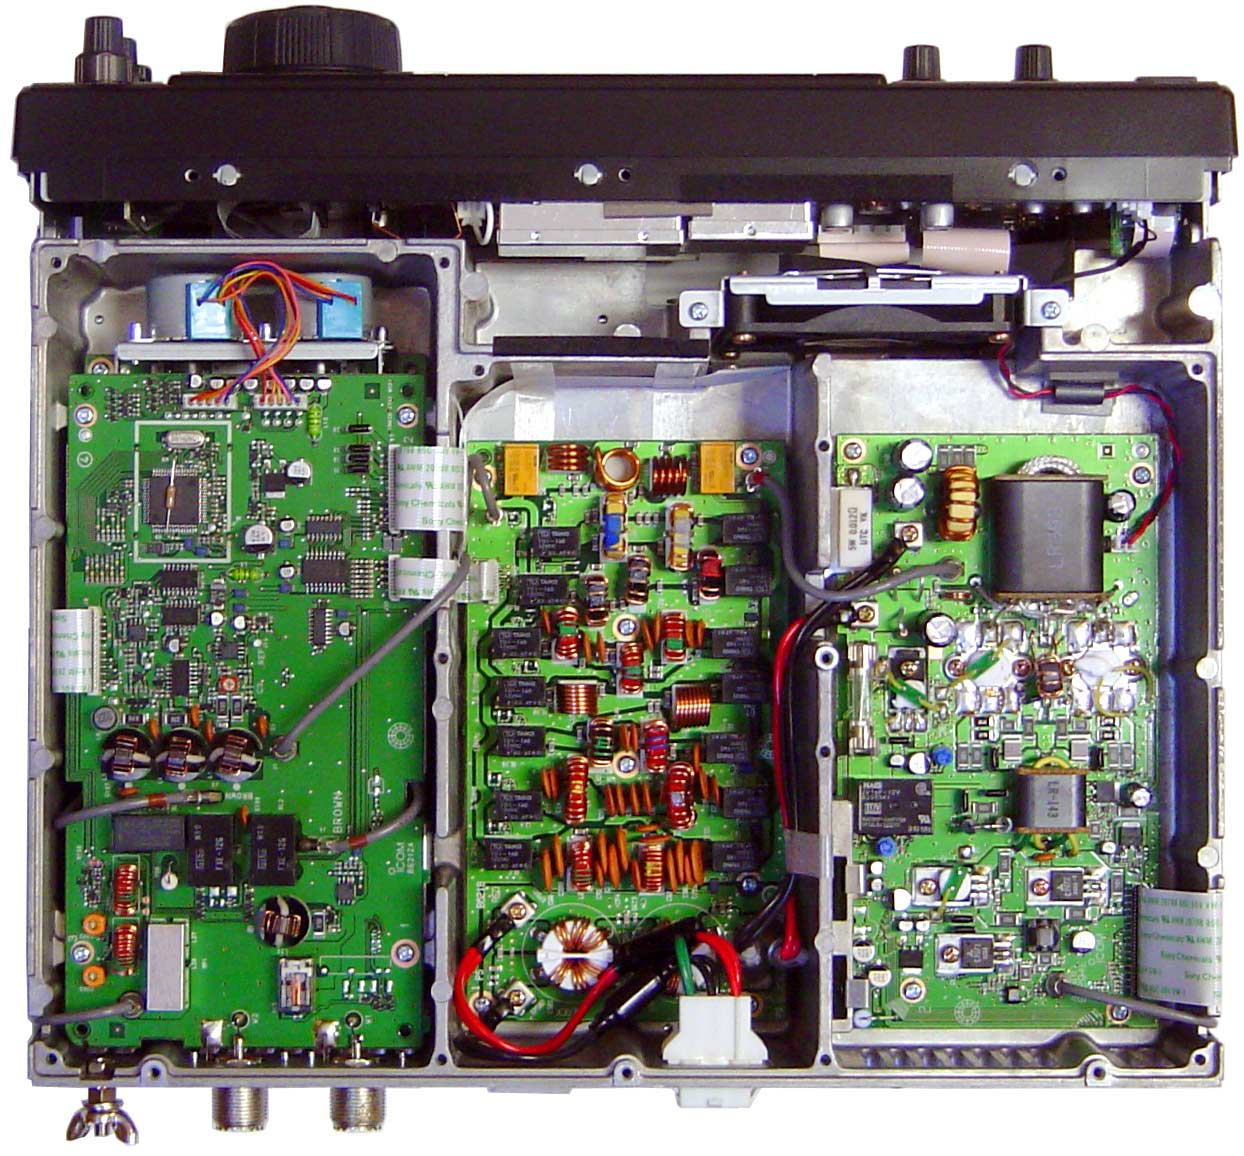 STION INSID VIWS TOP VIW PA unit Power amplifiers (Q, Q: S ) ooling Fan fan FILTR-A unit TUNR-A unit Antenna tuner PU (I: MM-FP) Fan control circuit Q, Q: S Q, Q: S